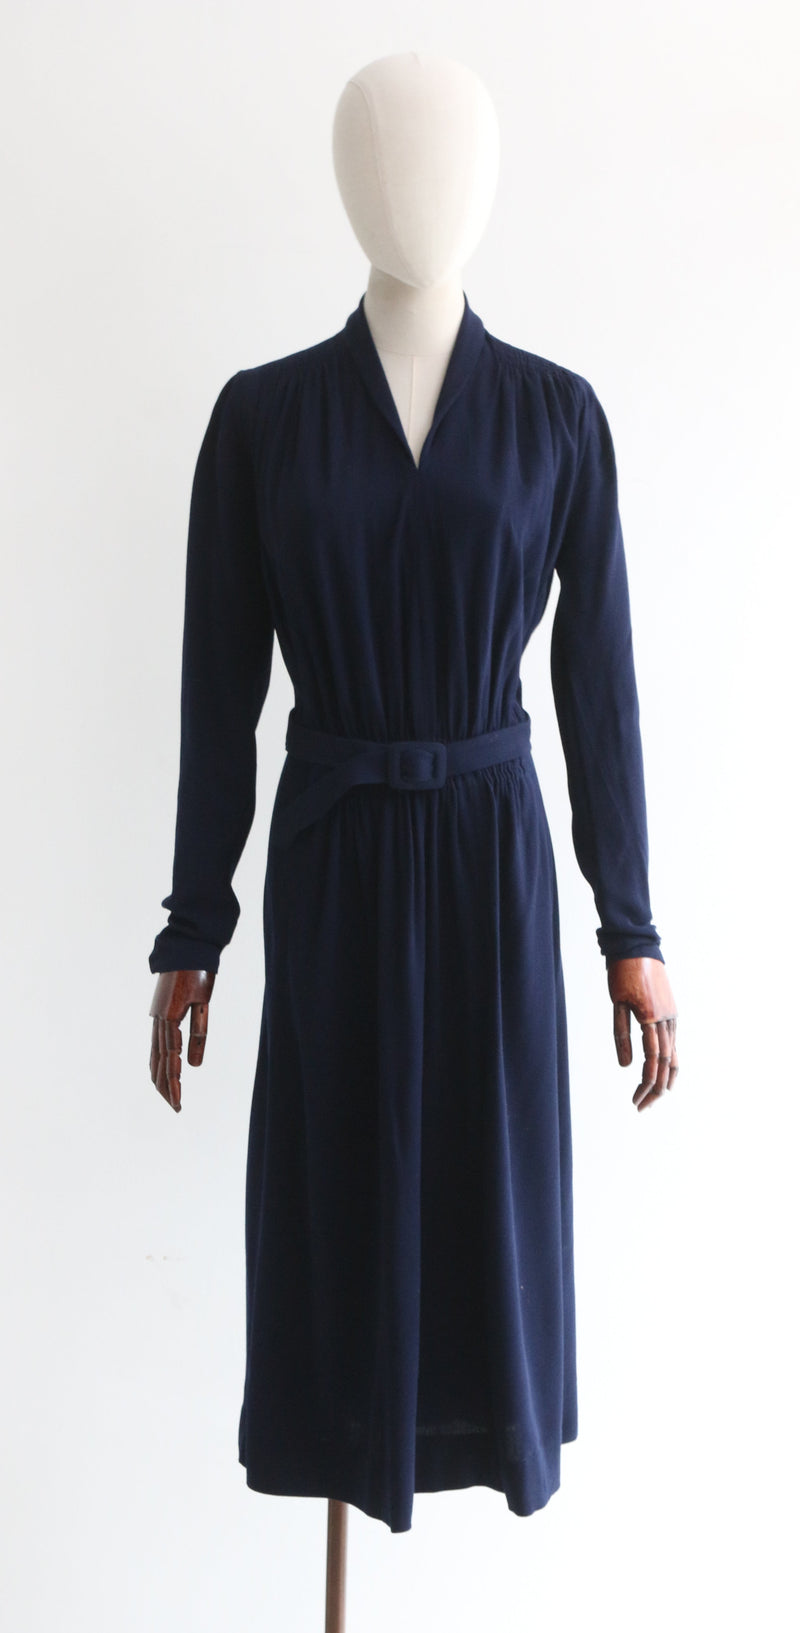 "Deep Navy Pleats" Vintage 1930's Deep Navy Pleated Dress & Waistcoat UK 12 US 8